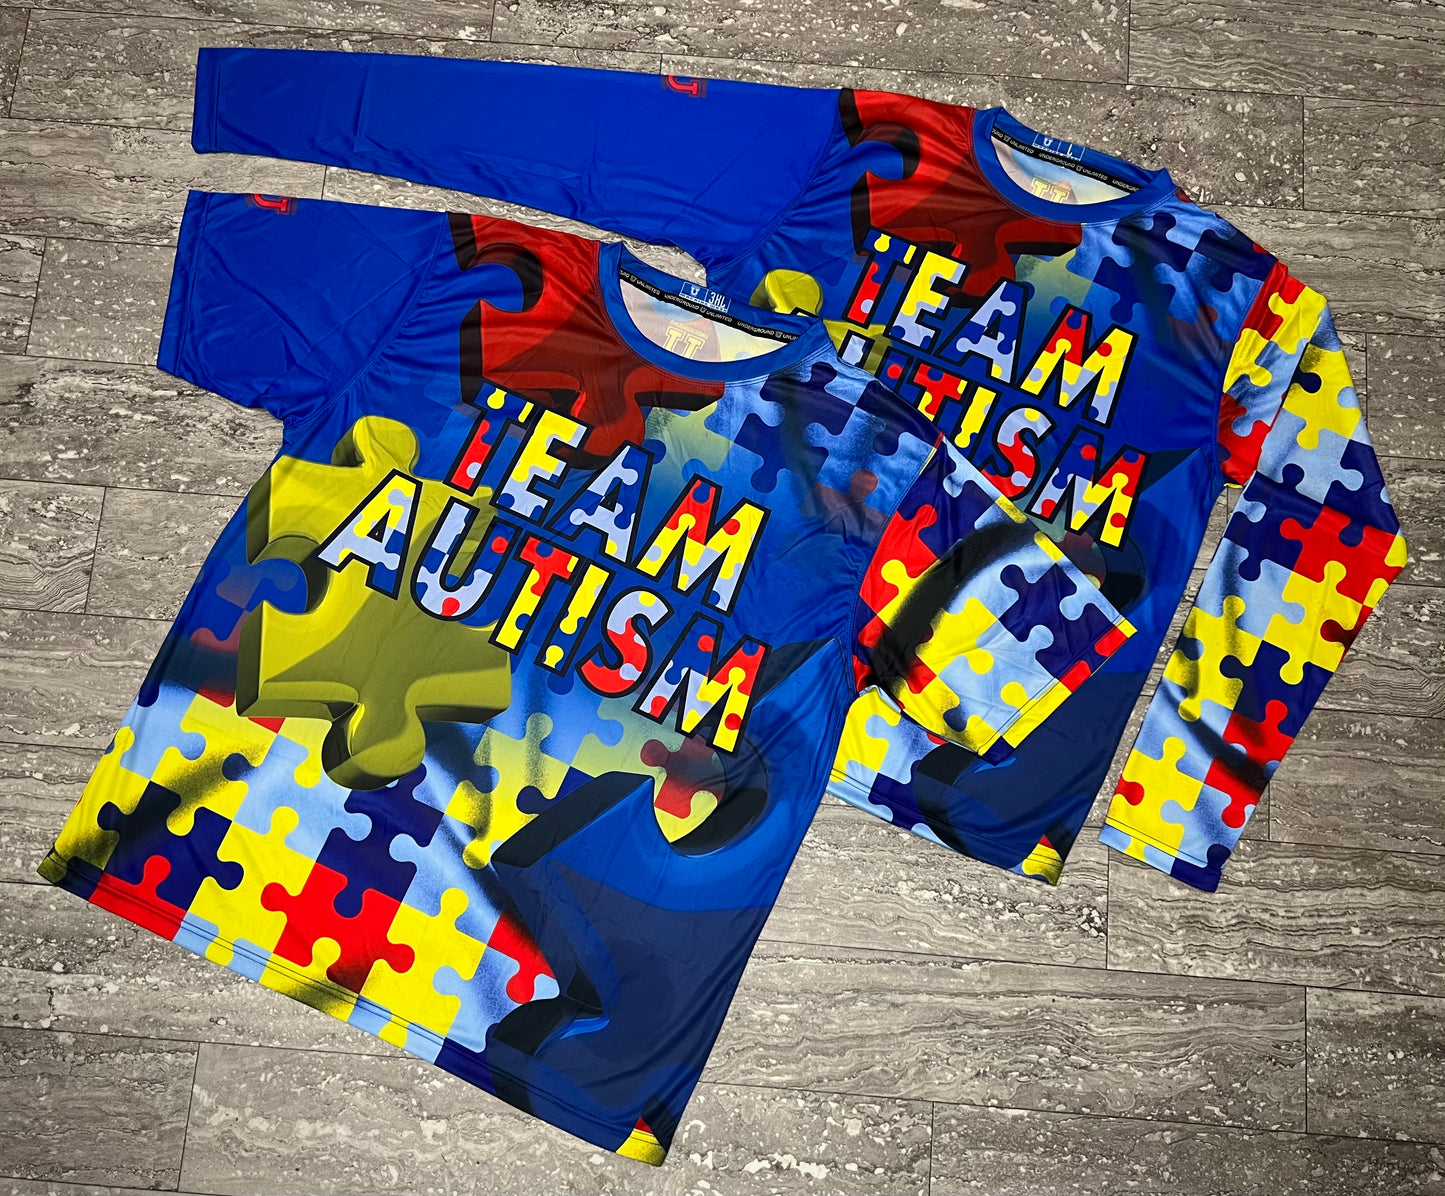 Team Autism Performance Apparel ~ Blue Puzzle Fade {Royal}